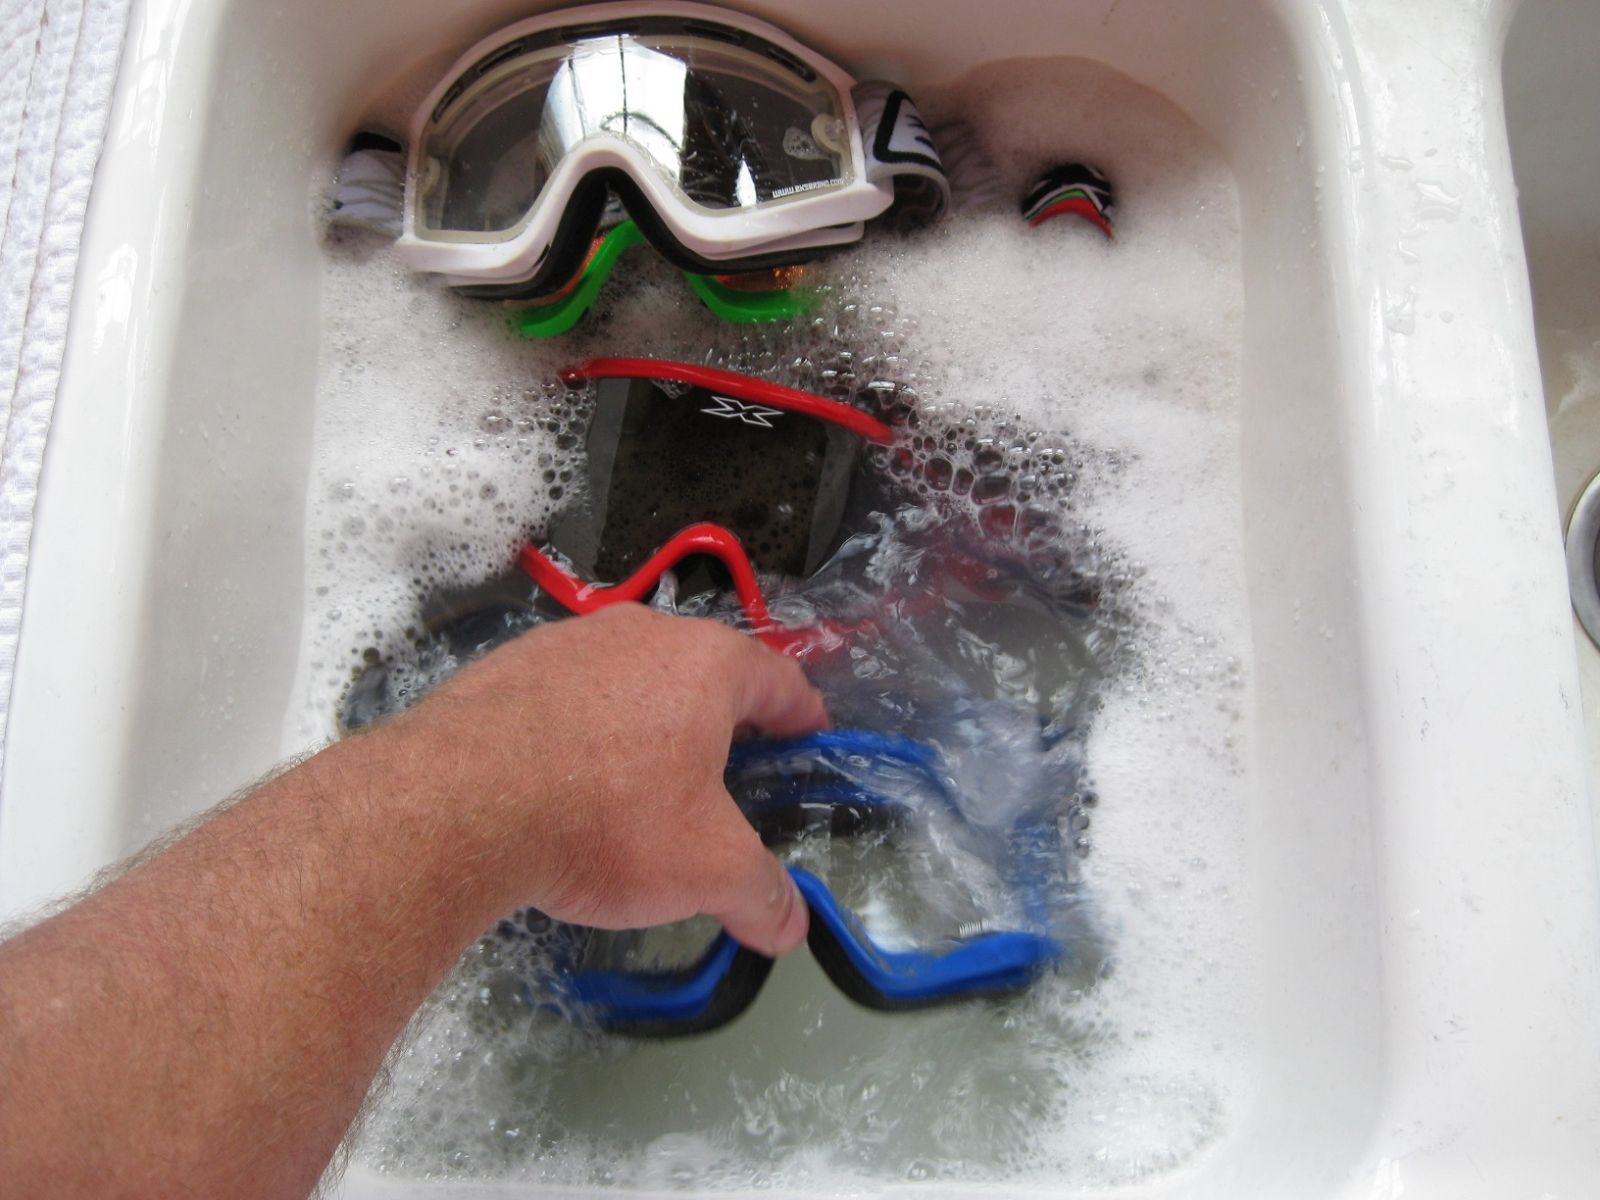 Washing motocross goggles